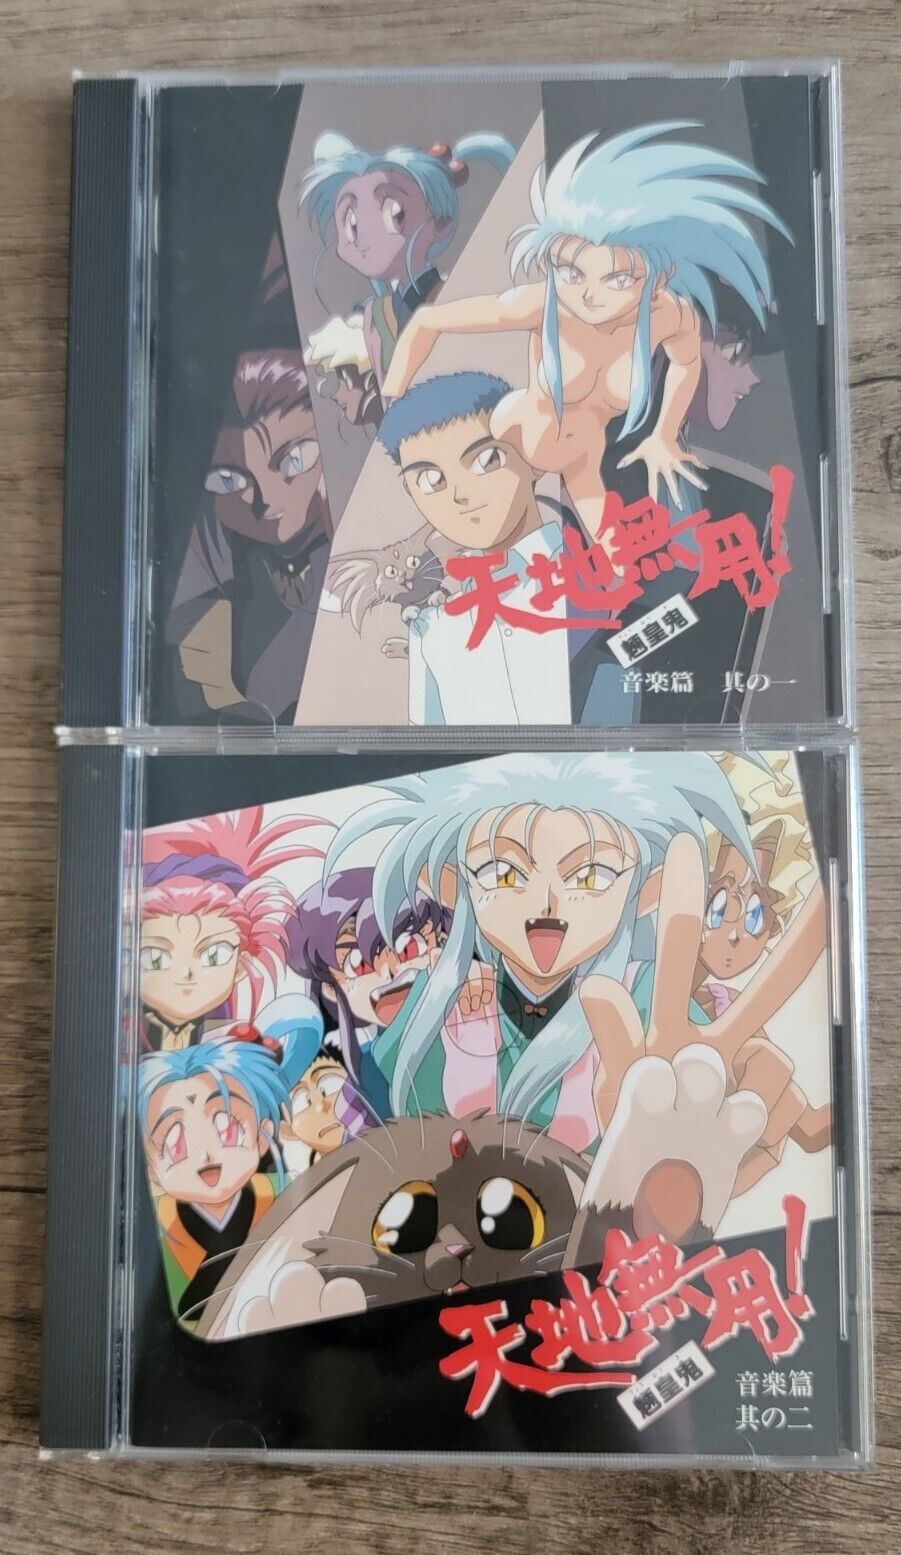 Tenchi Muyo ORIGINAL MINI DRAMA CD Japan Anime Lot of 2, Music PICA-1011 & 1003